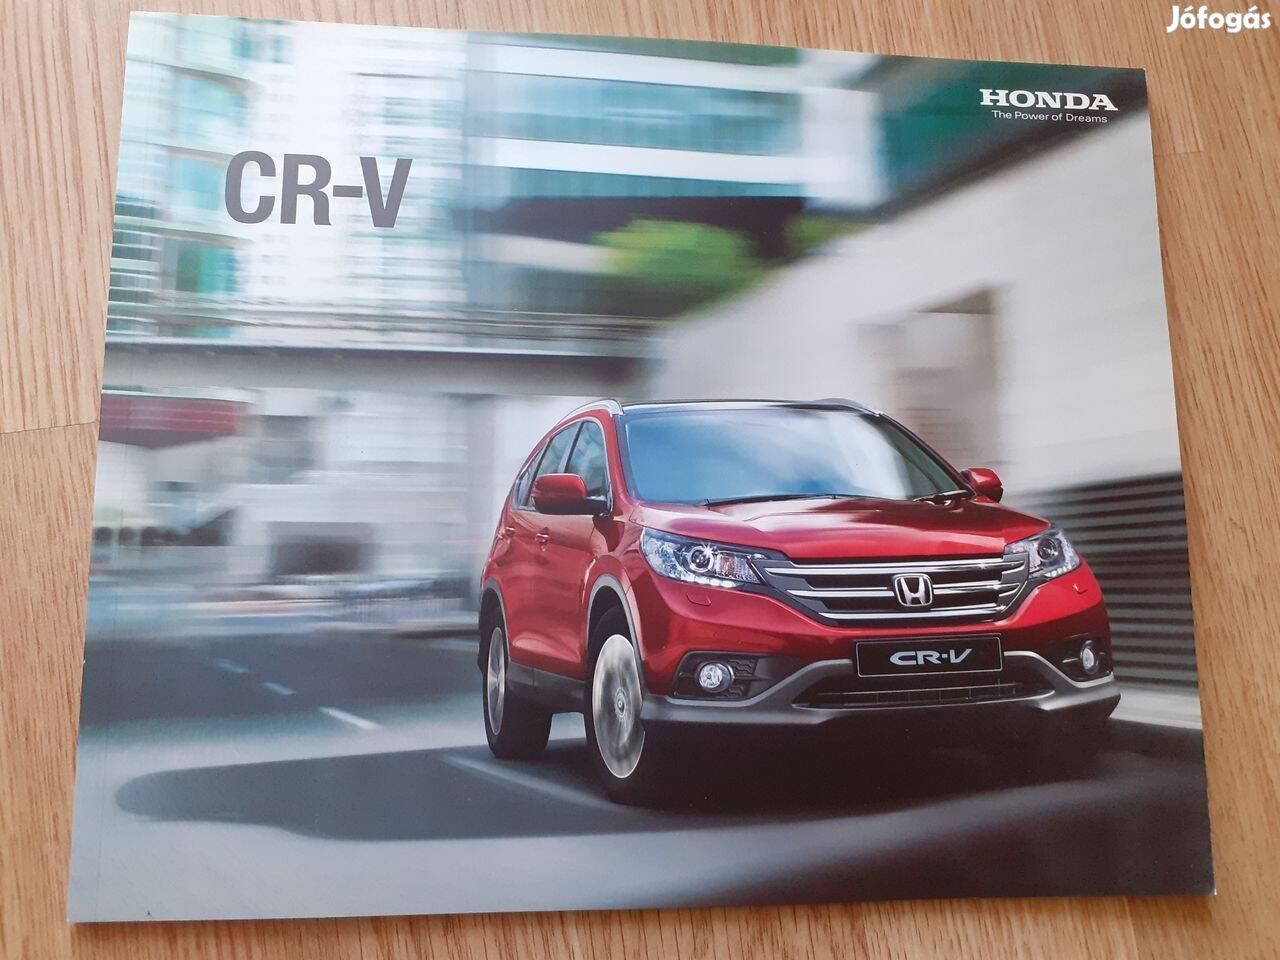 Honda CR-V prospektus - 2013, magyar nyelvű